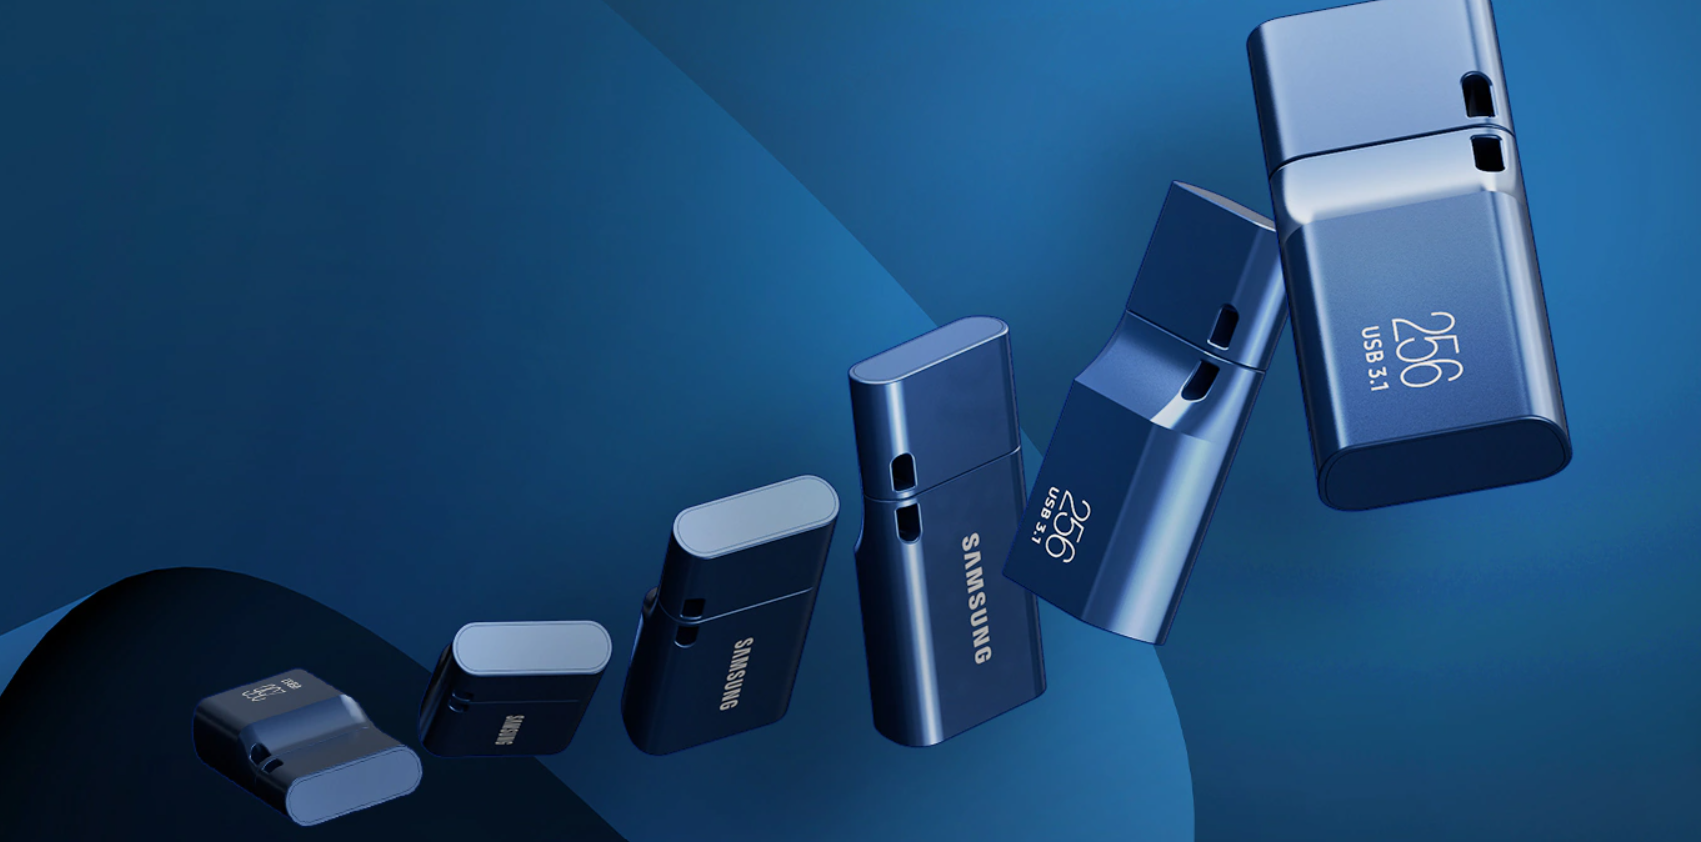 Samsung USB Type-C Flash Drive 256 GB